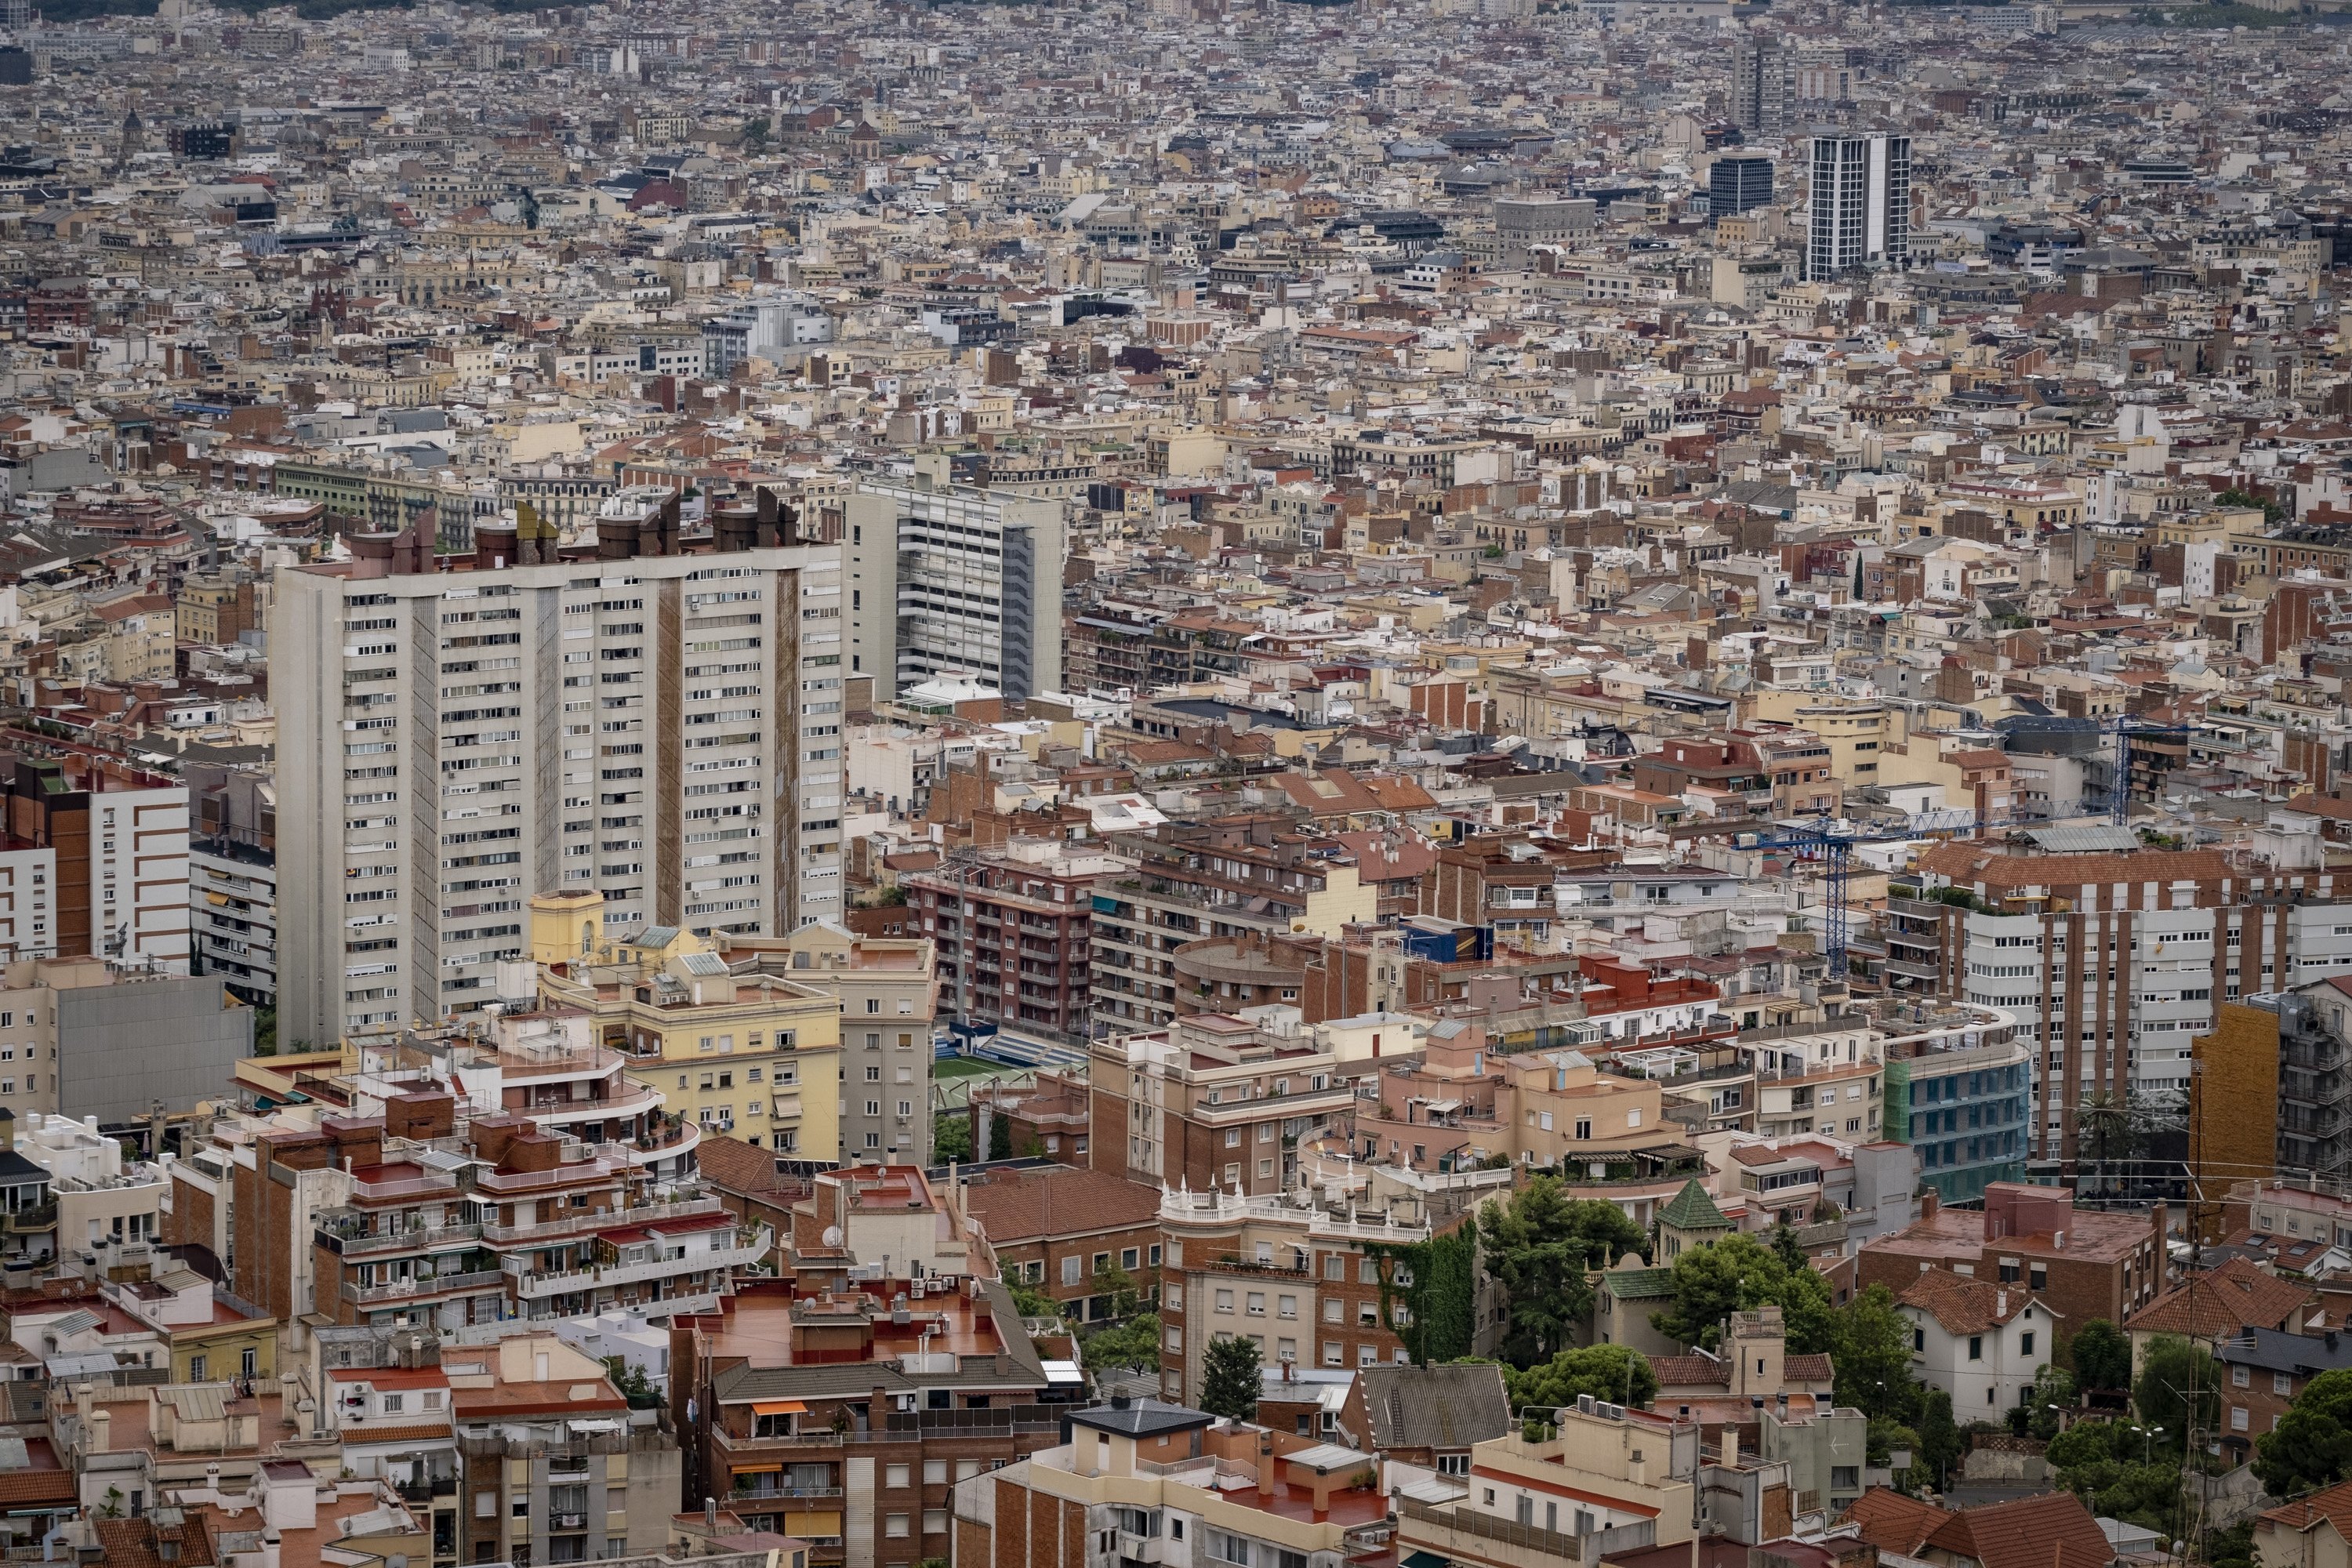 Recurs vistes Barcelona edificis, economia, venda, lloguer, habitatge / Foto: Carlos Baglietto